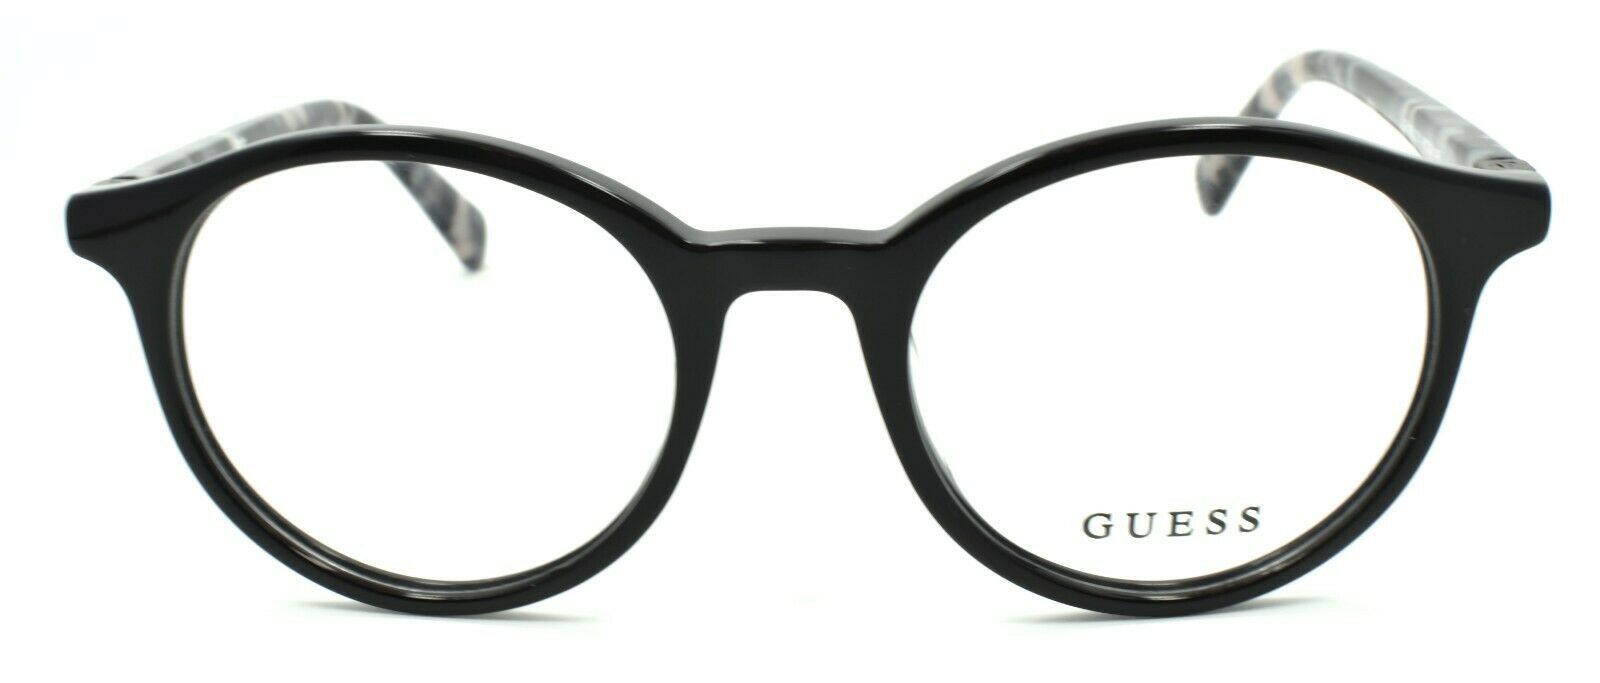 2-GUESS GU1951 001 Men's Eyeglasses Frames Round 48-19-145 Black + CASE-664689981908-IKSpecs